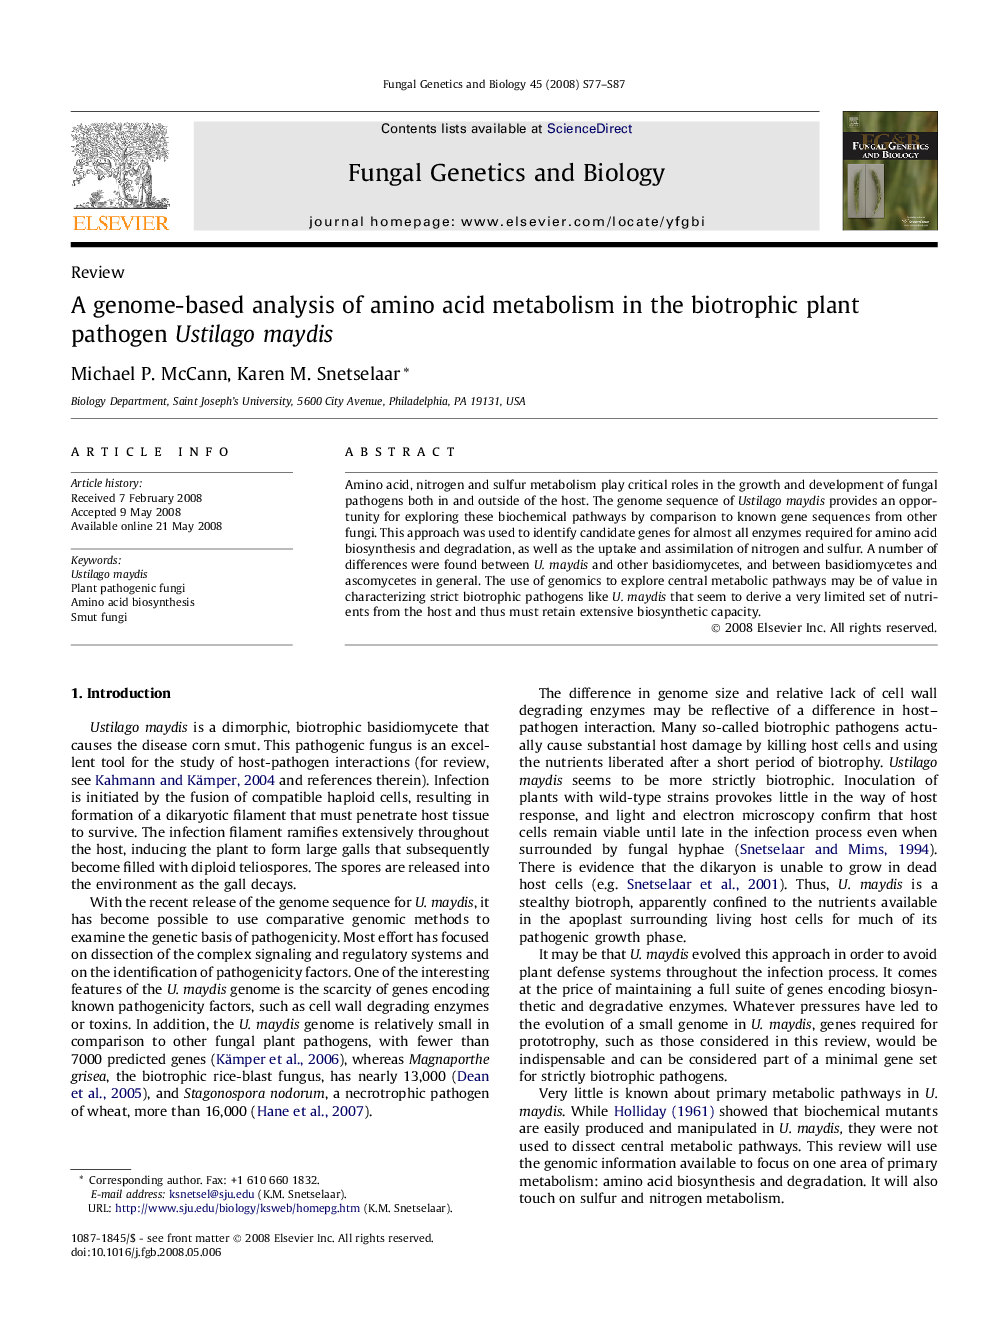 A genome-based analysis of amino acid metabolism in the biotrophic plant pathogen Ustilago maydis